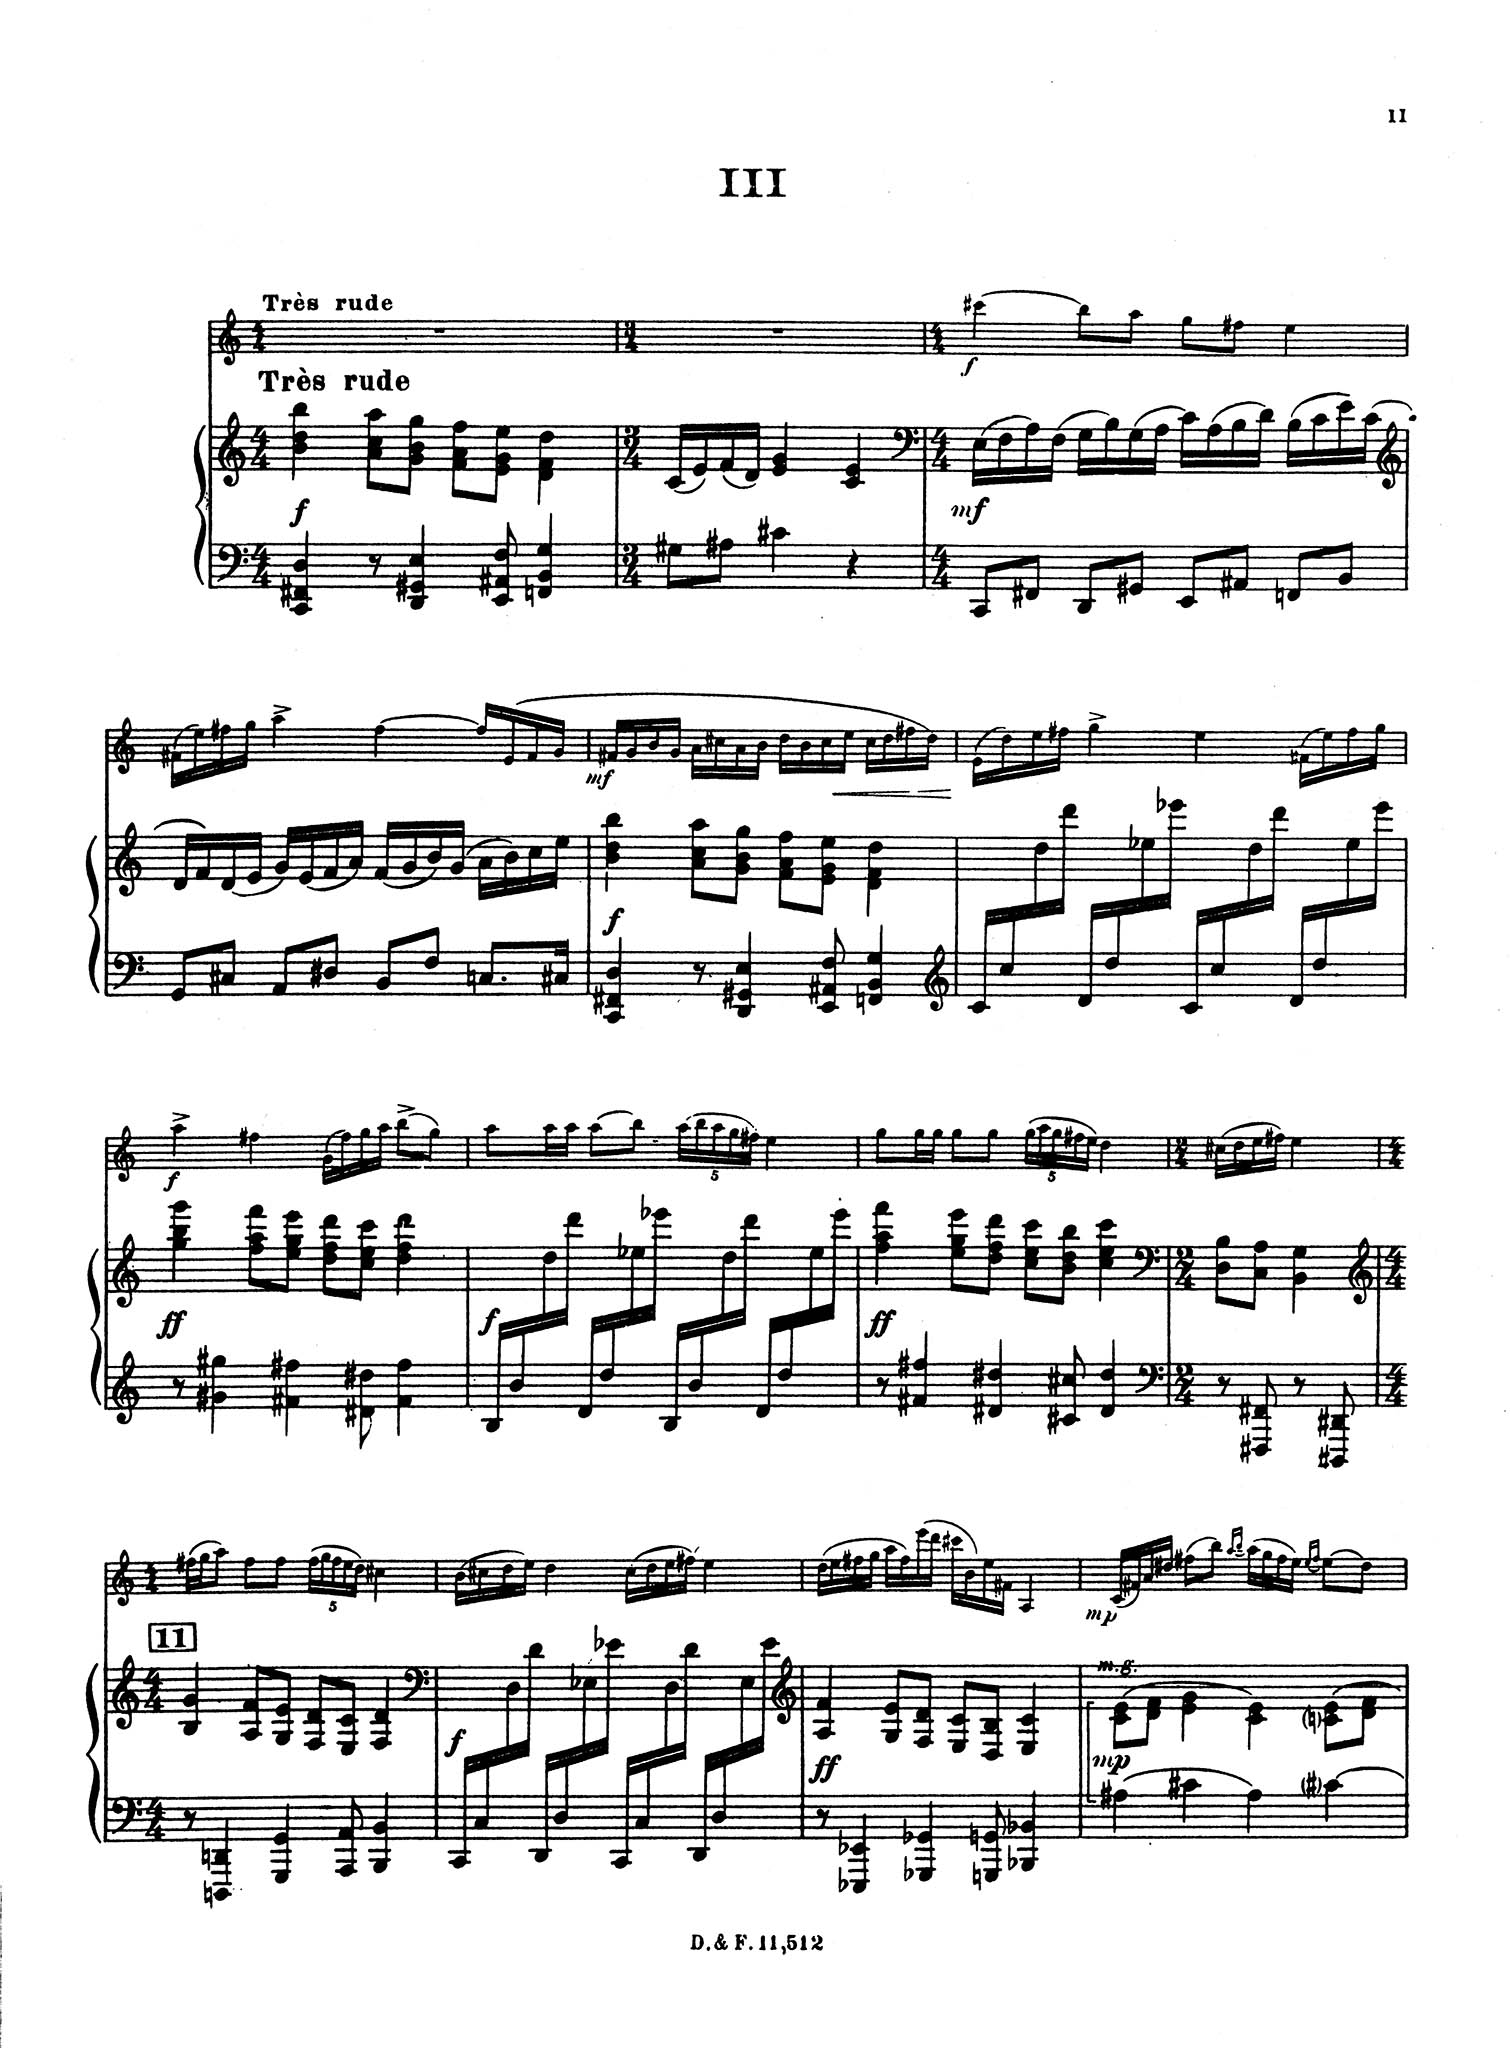 Sonatina, Op. 100 - Movement 2